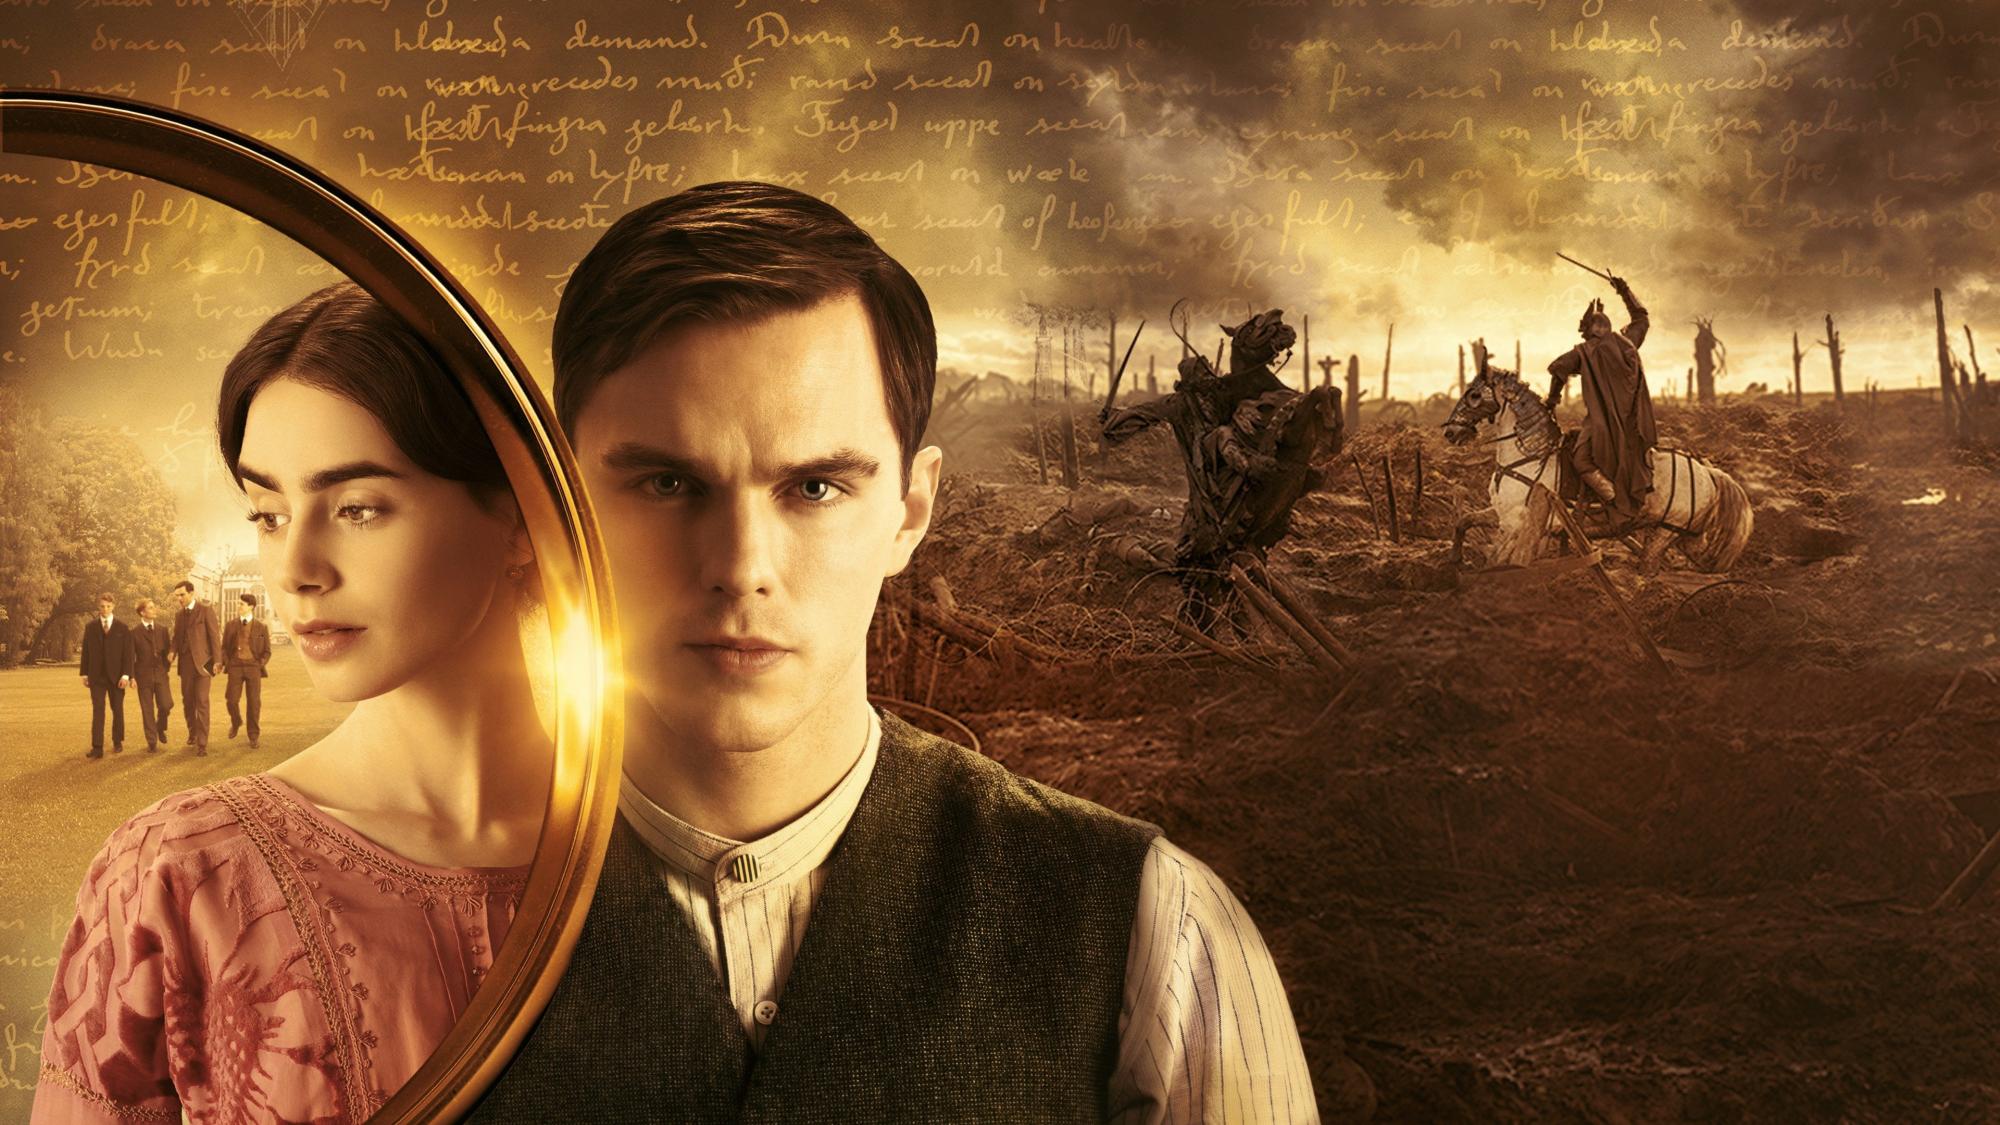 Backdrop Image for Tolkien